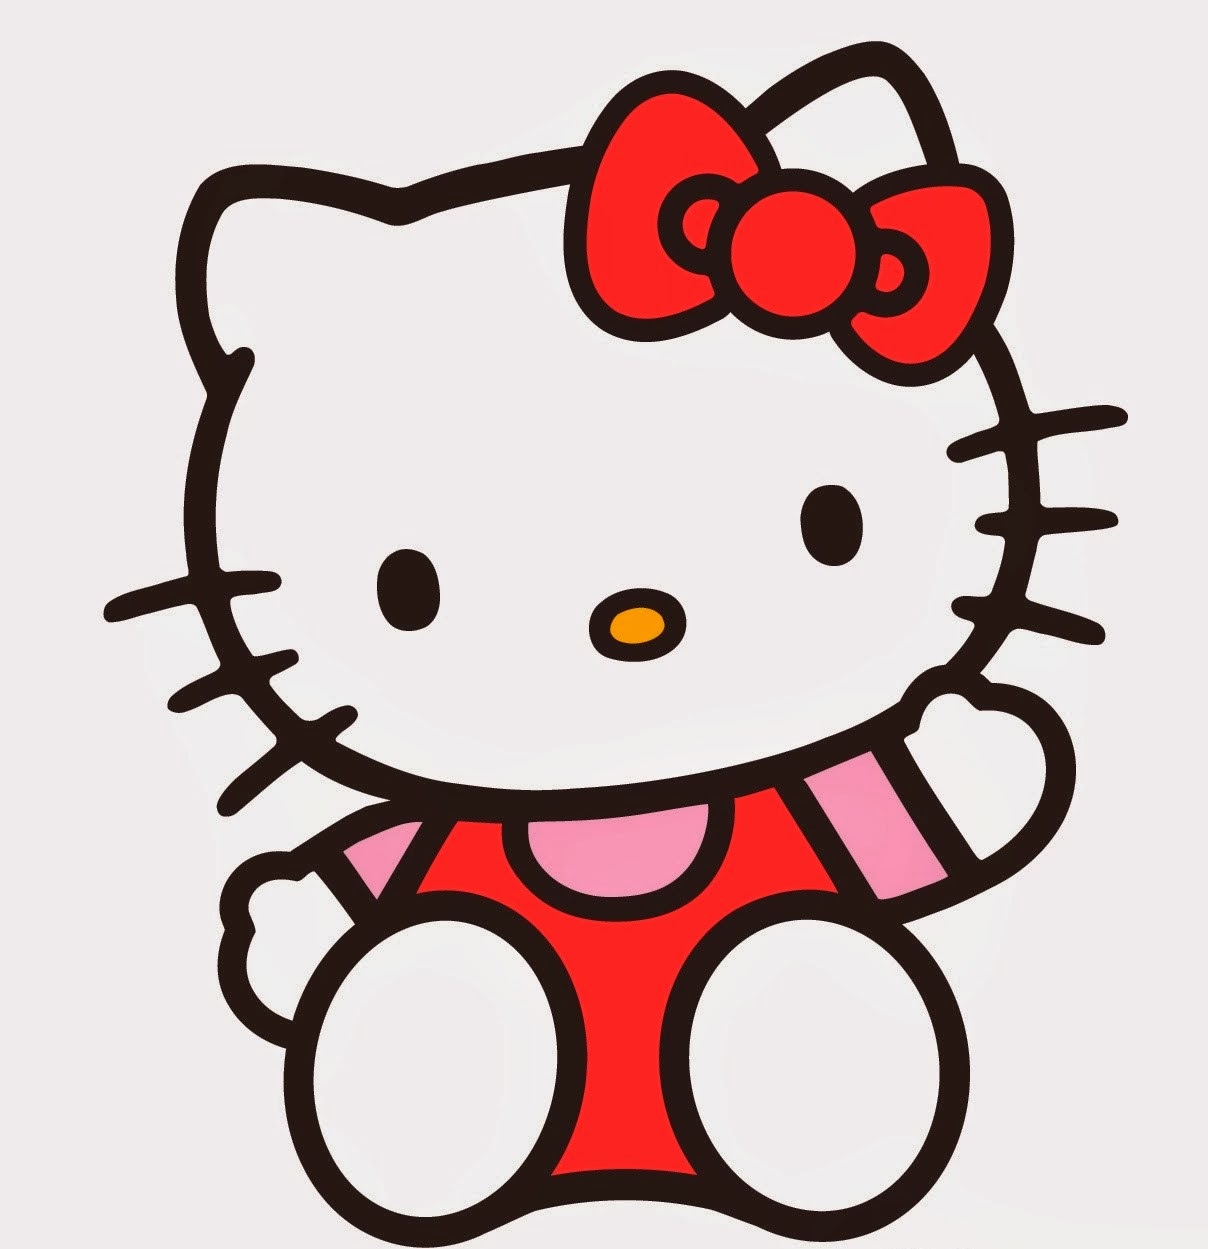 Hello Kitty festeja 40 anos desafiando personagens modernos